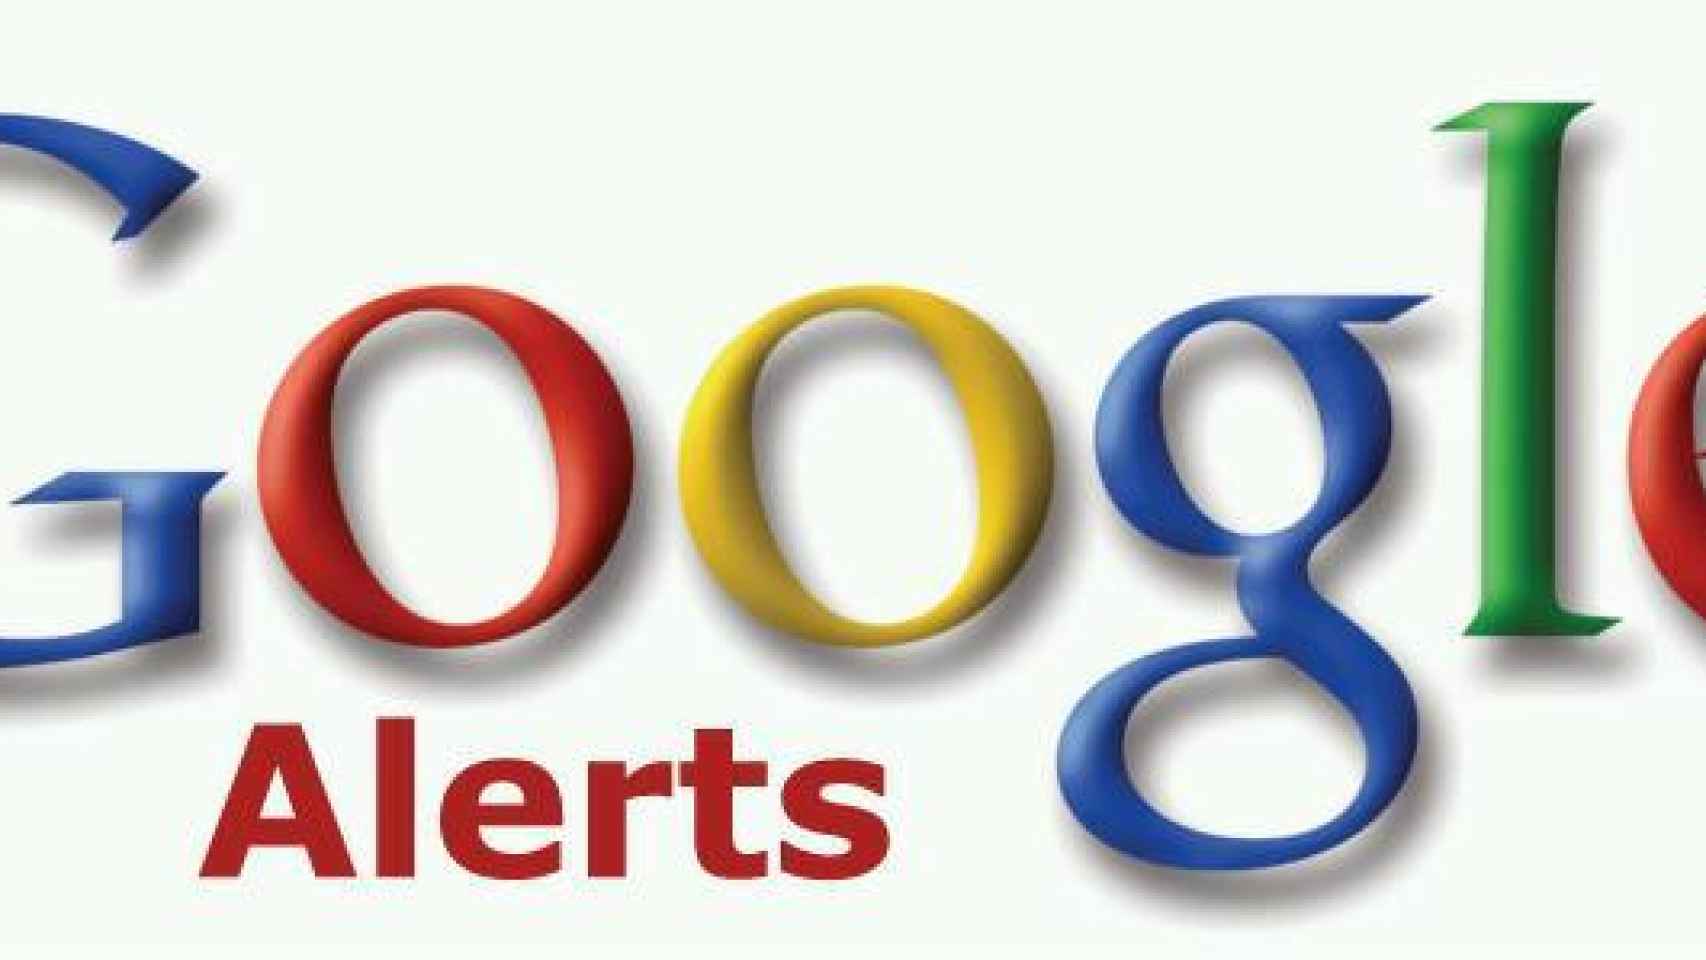 google-alerts-principal